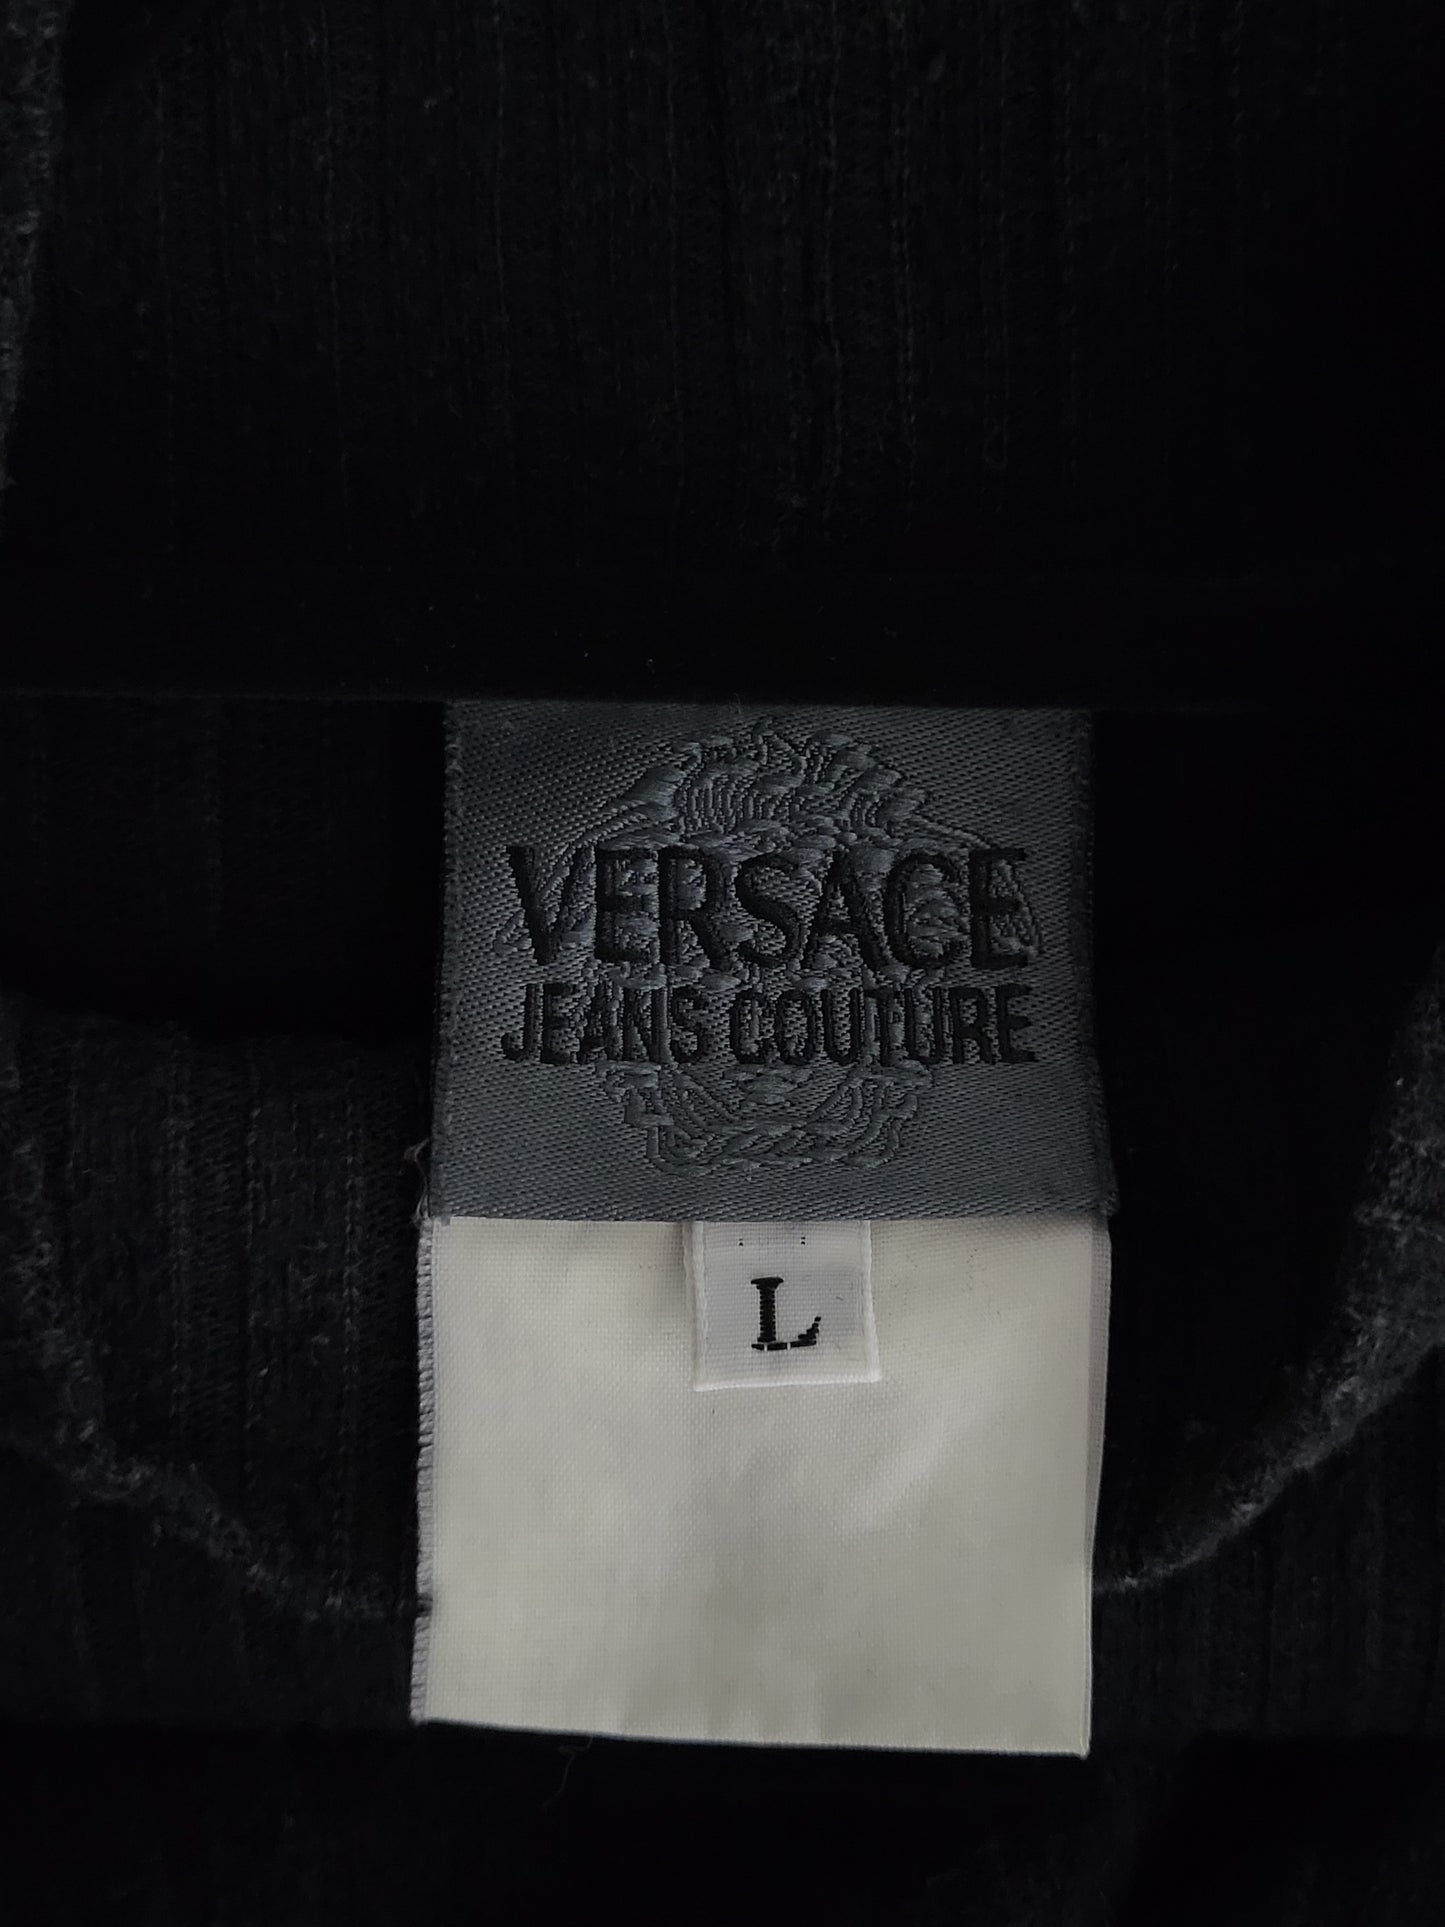 VERSACE Jeans Couture - Pulli - Klassisch - Schwarz - Damen - M/L